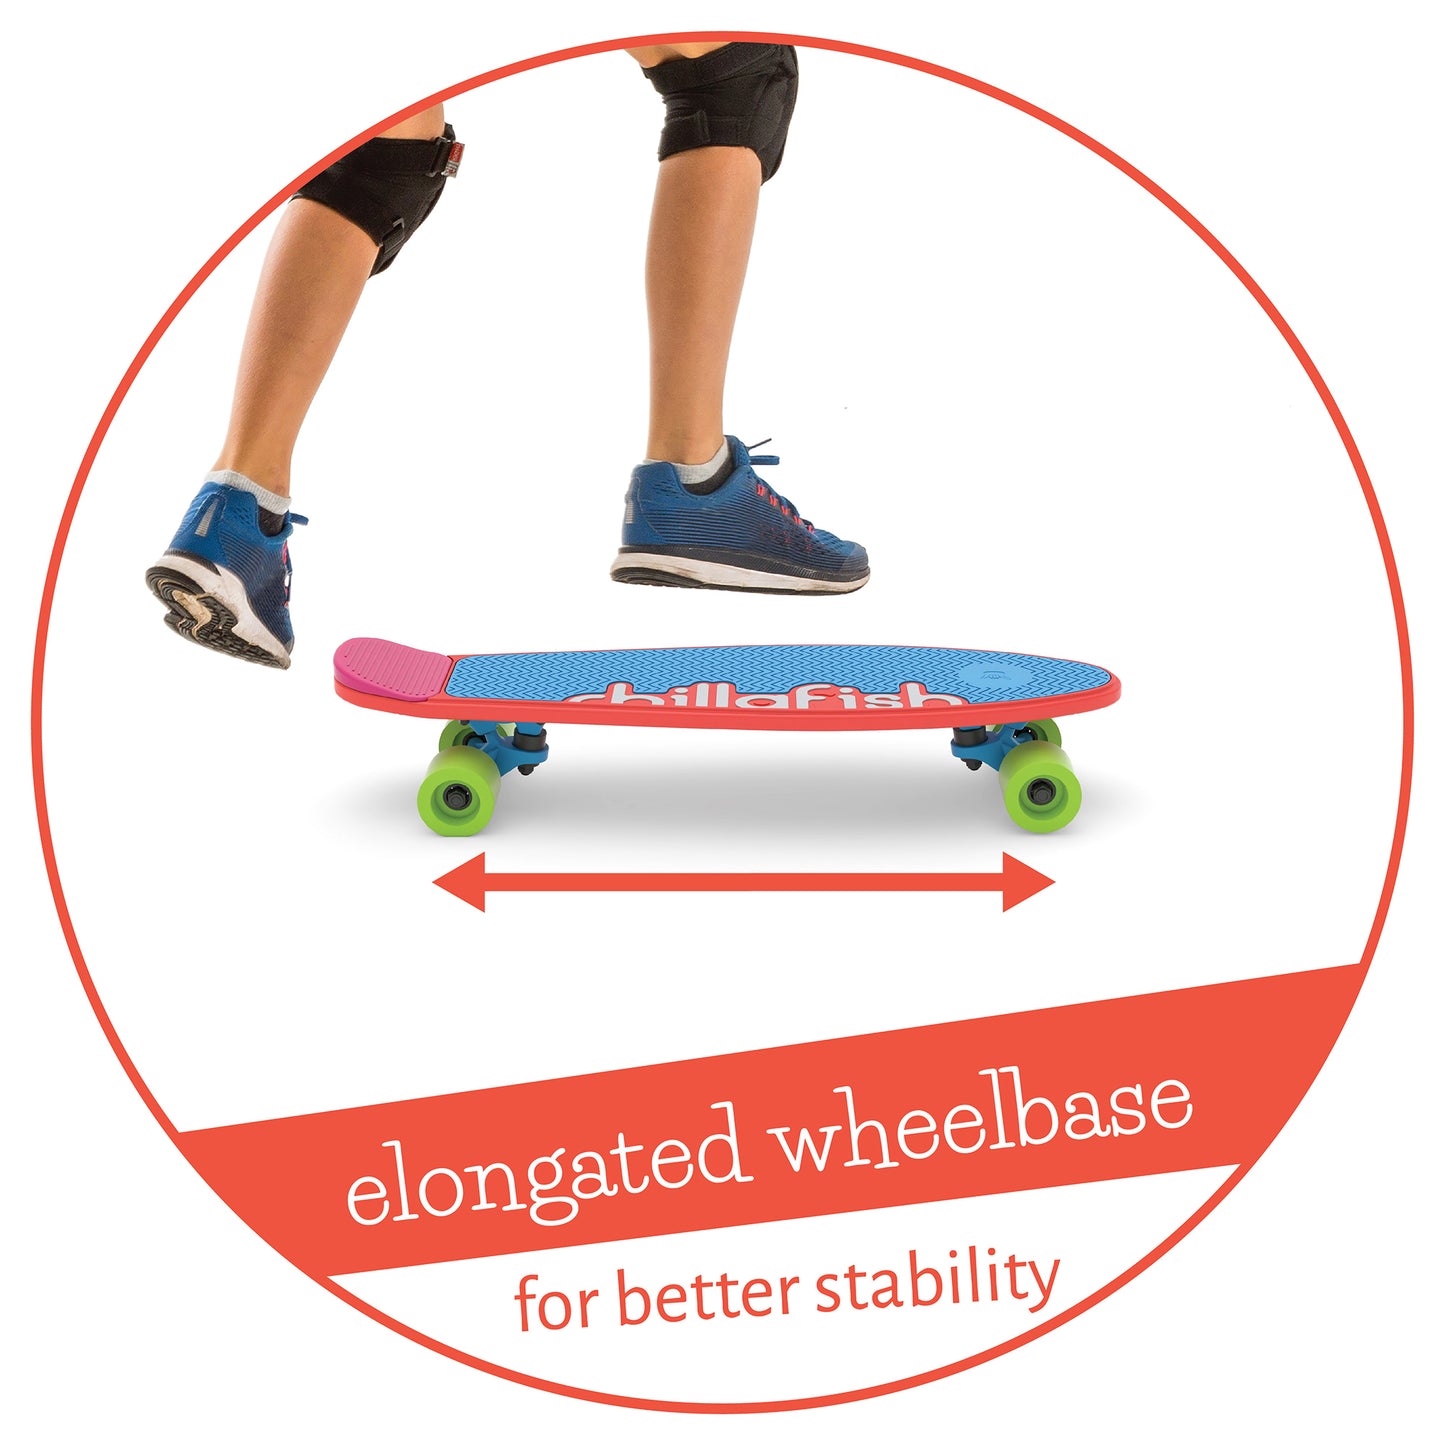 Skatie - customize your first skateboard